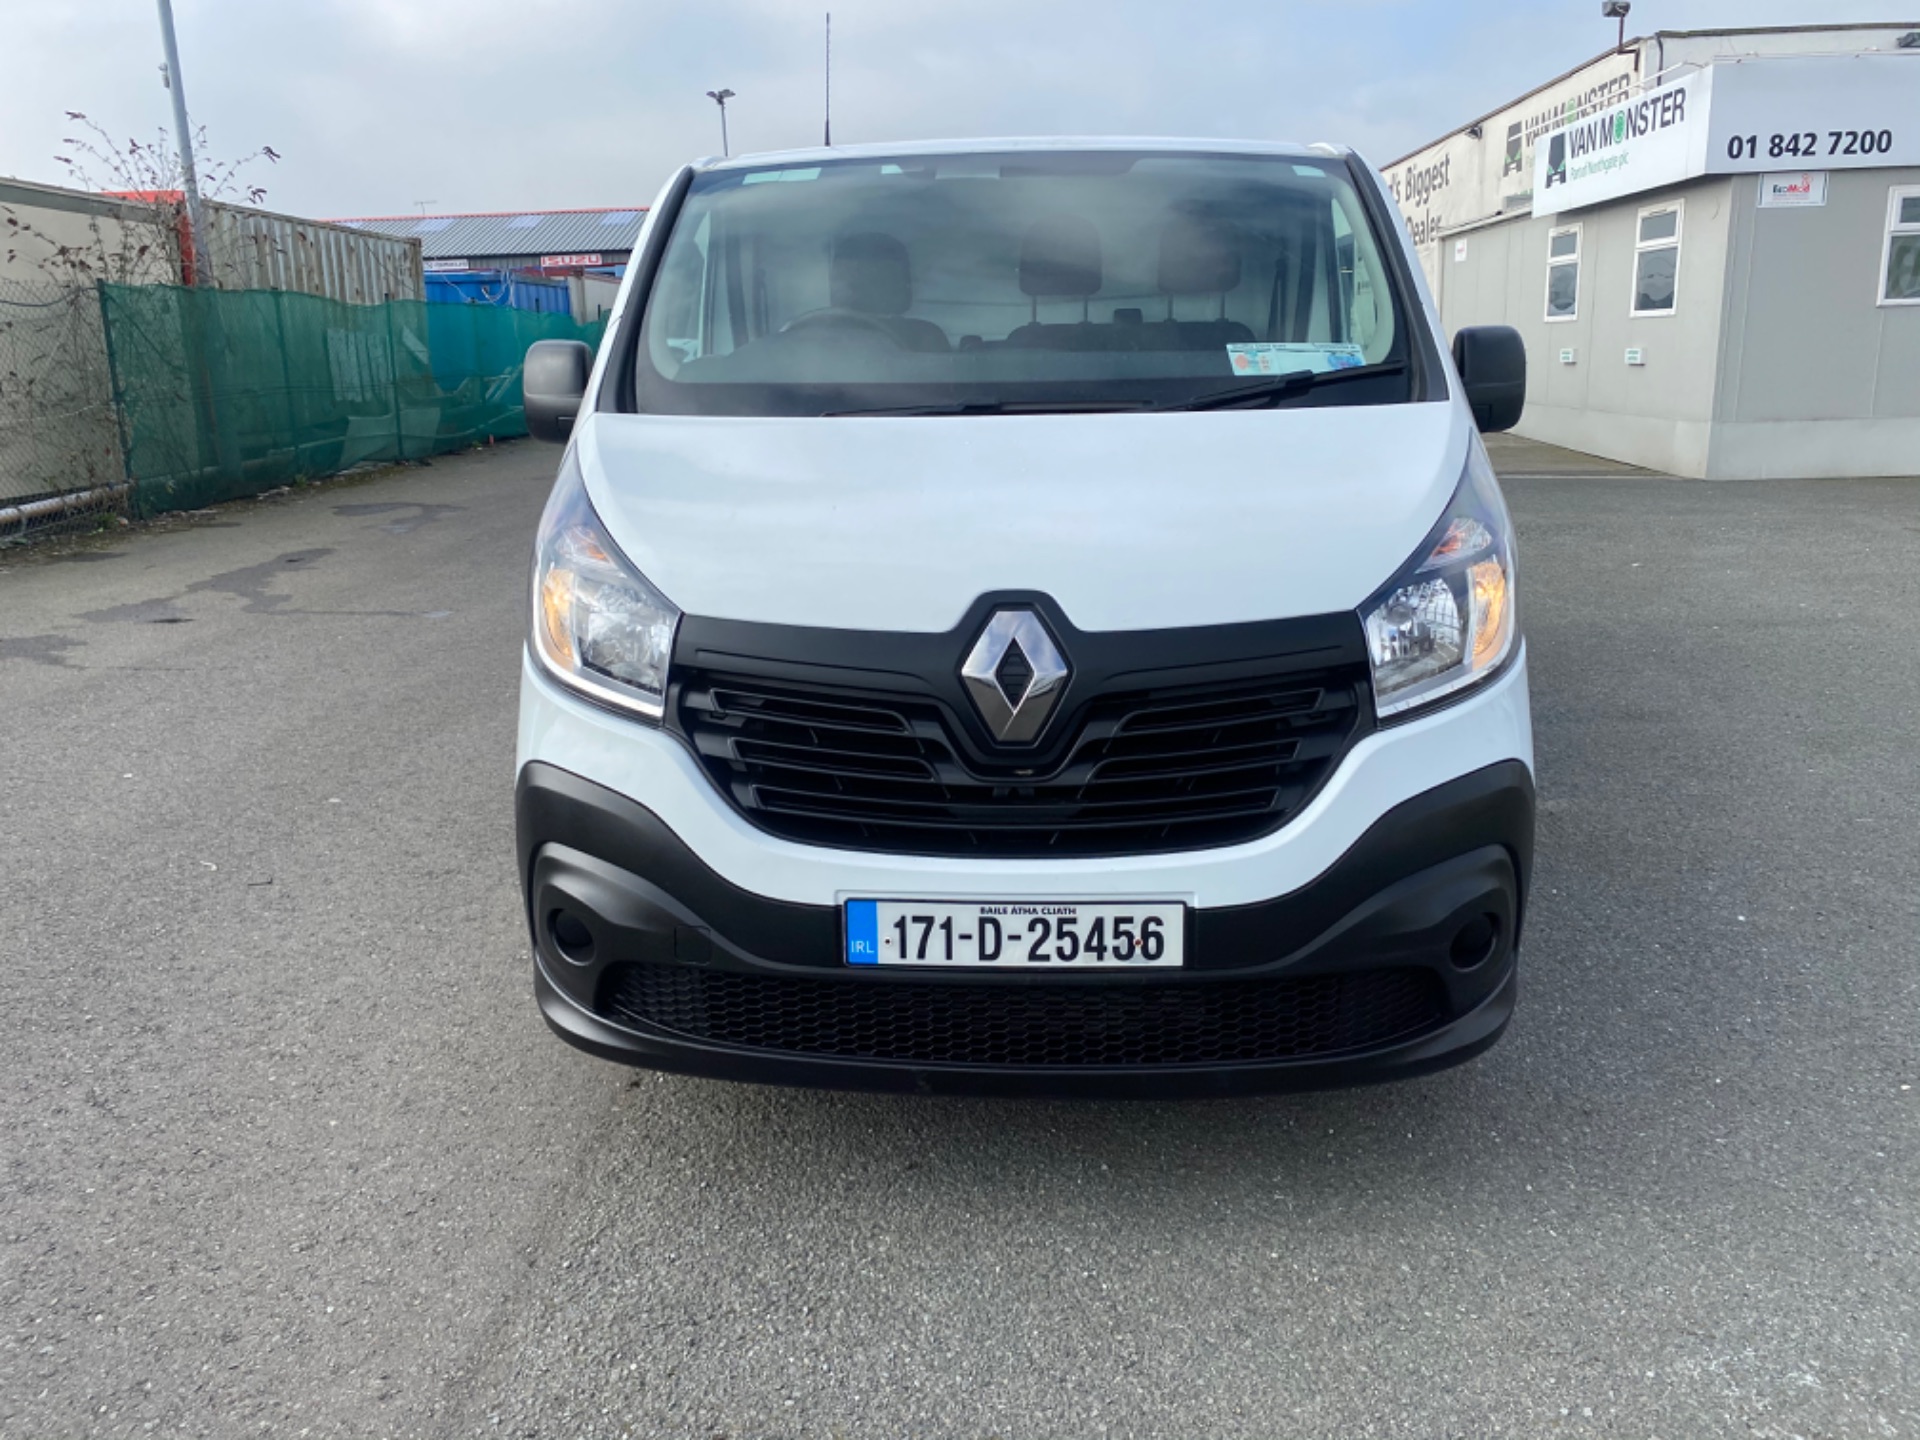 Renault Trafic Vans for Sale | Van Monster